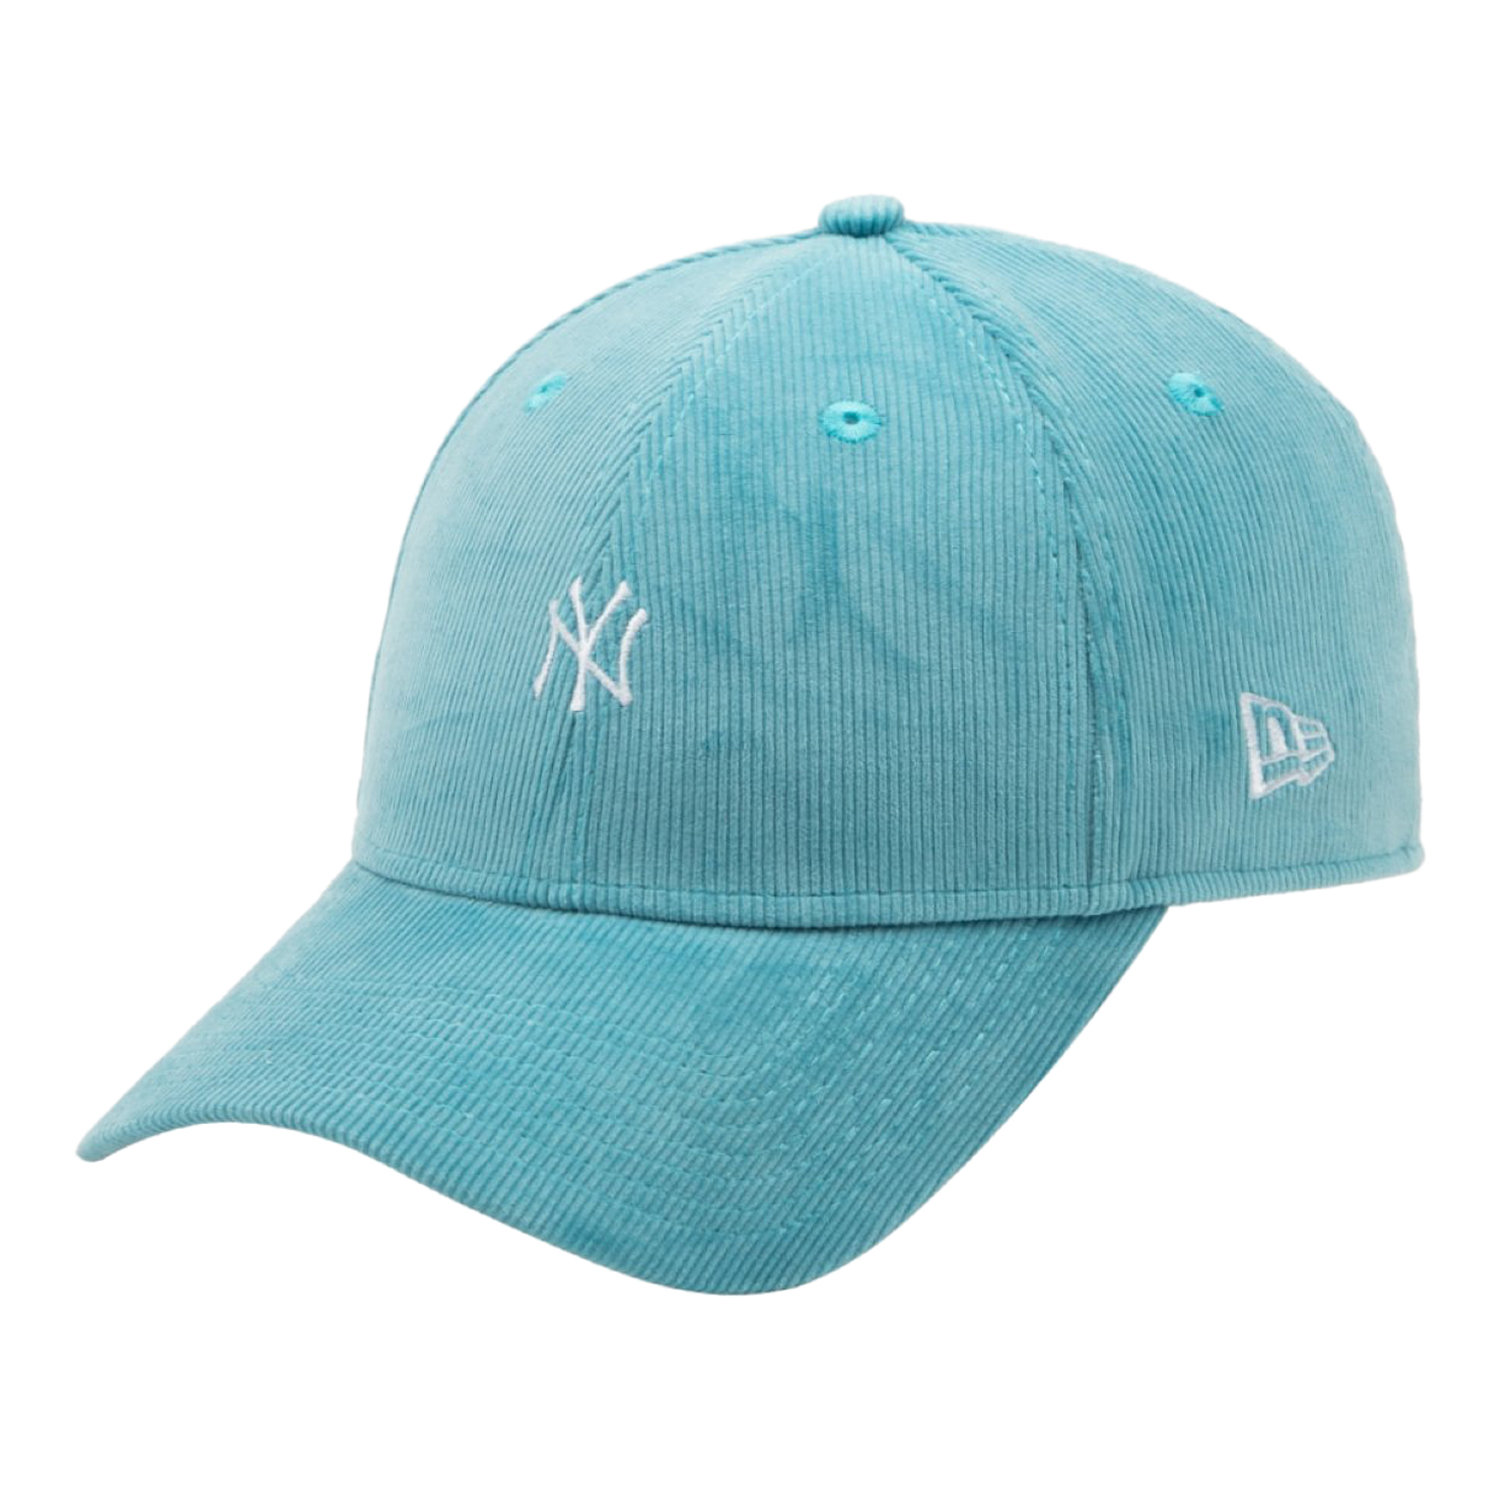 940 MLB NEW YORK YANKEES CORDUROY BALL CAP SKY BLUE